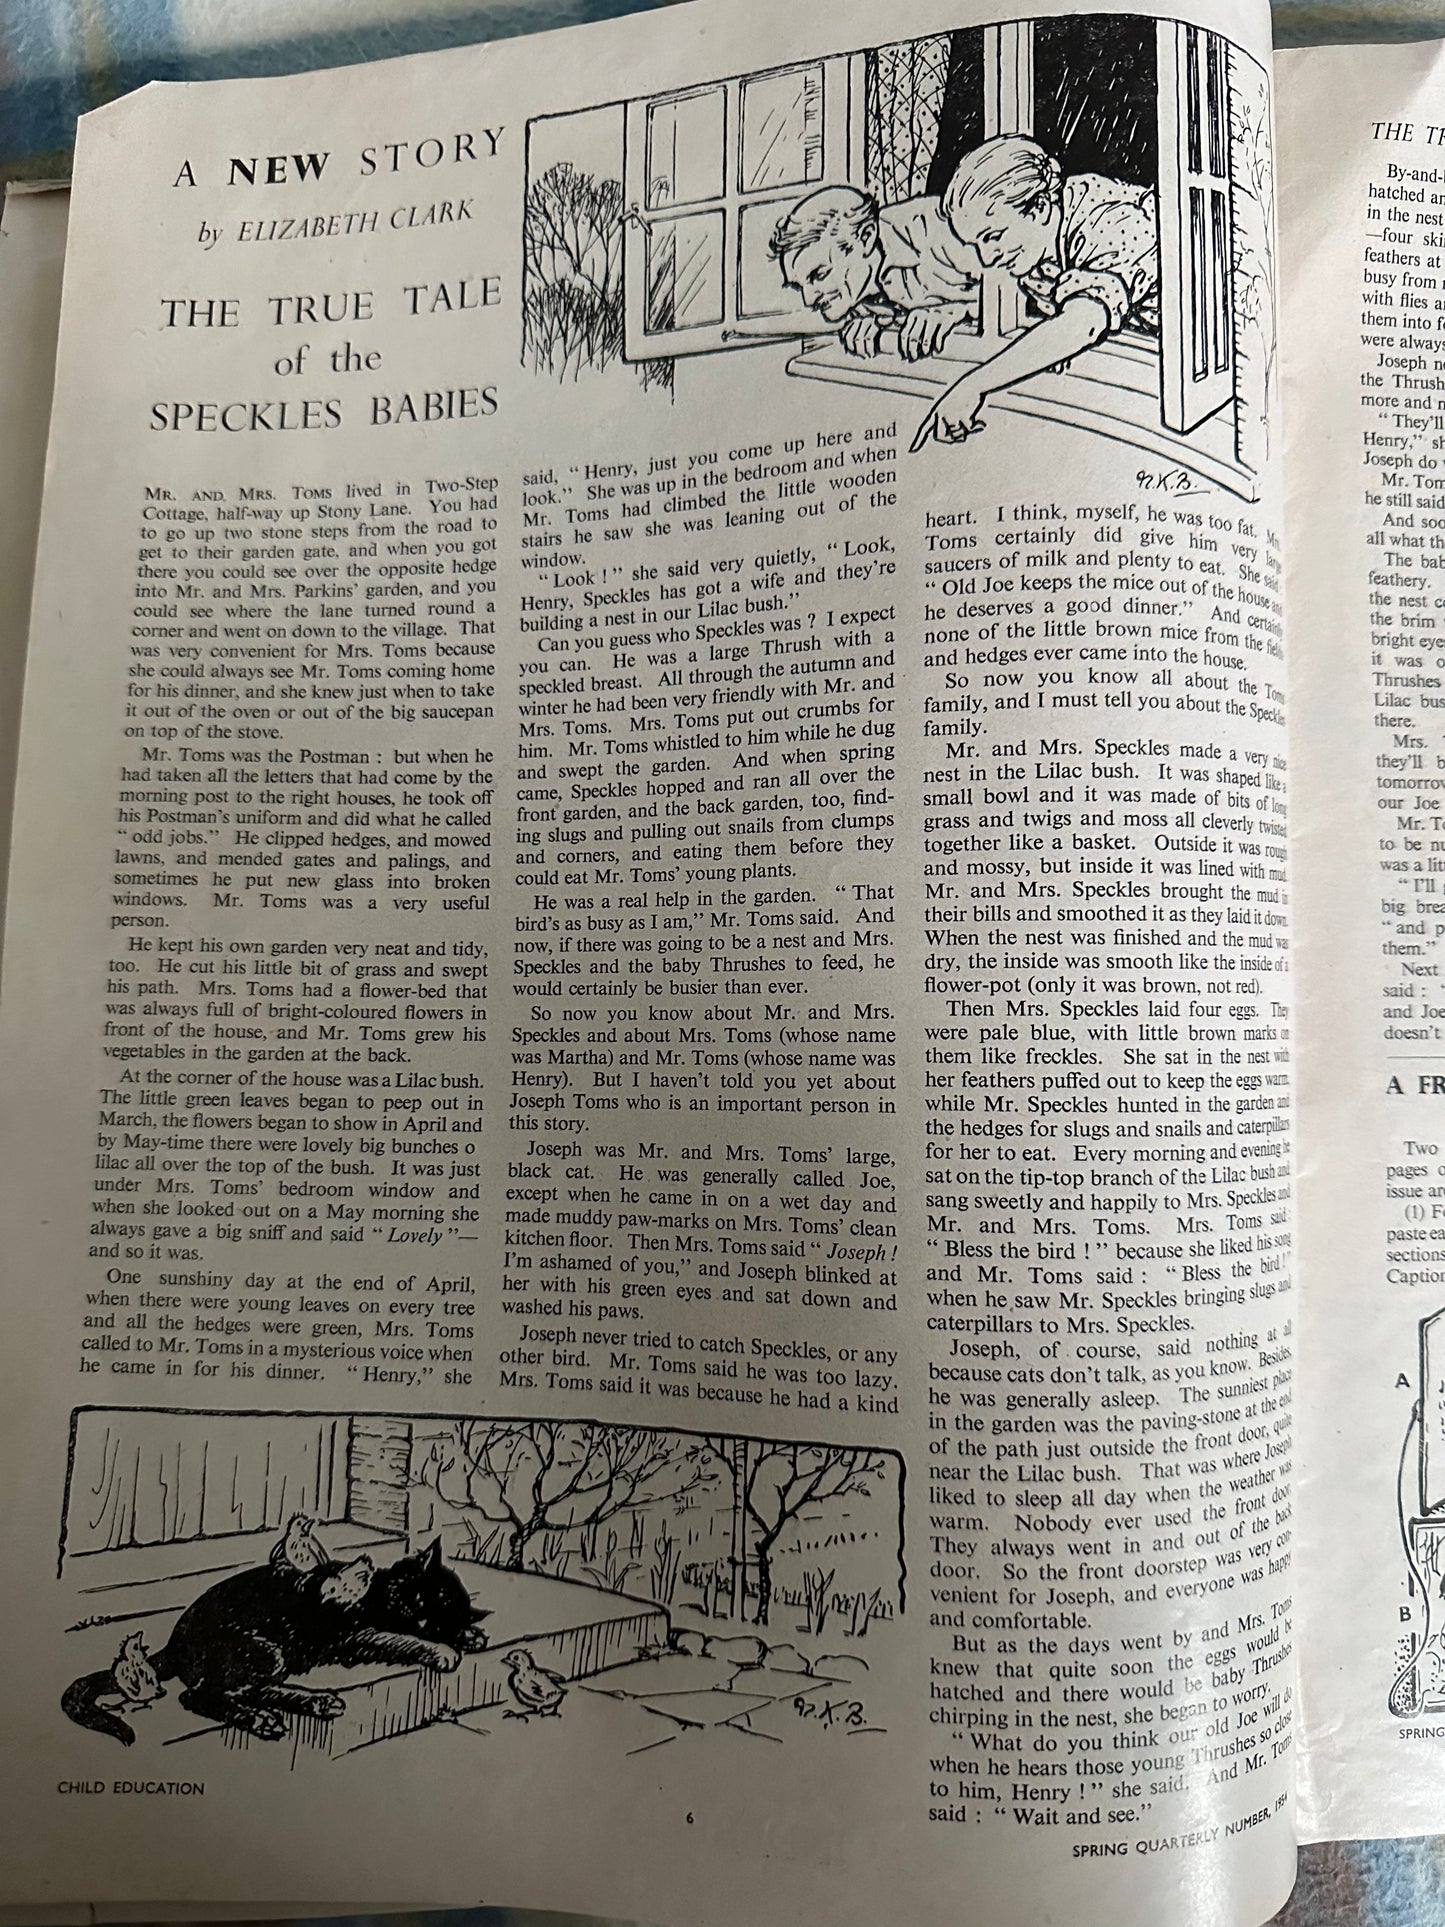 1954 Child Education(Spring Quarter Issue) Evans Brothers Ltd